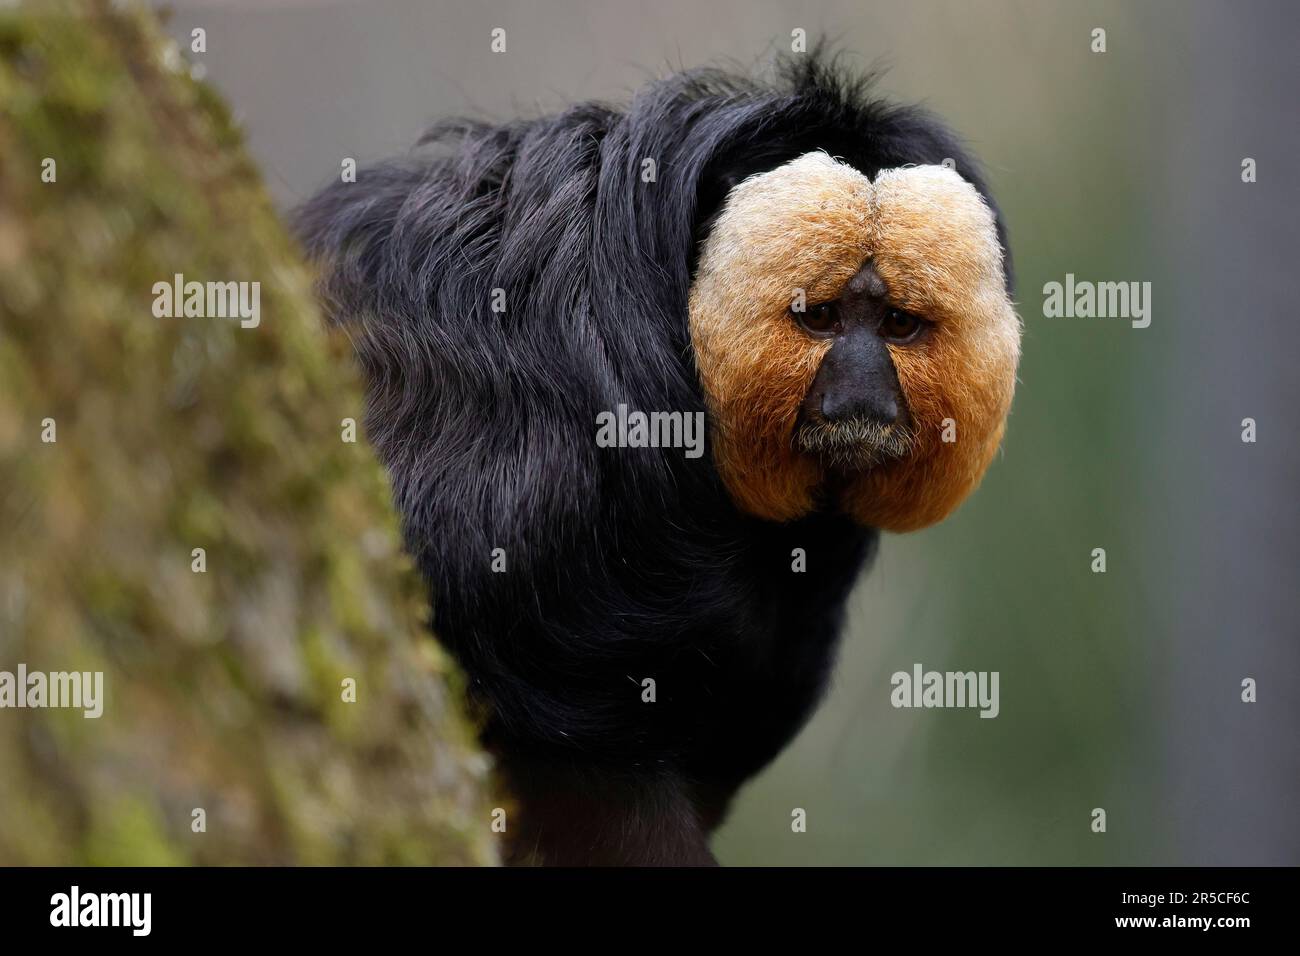 Howler monkey looking at camera hi-res stock photography and